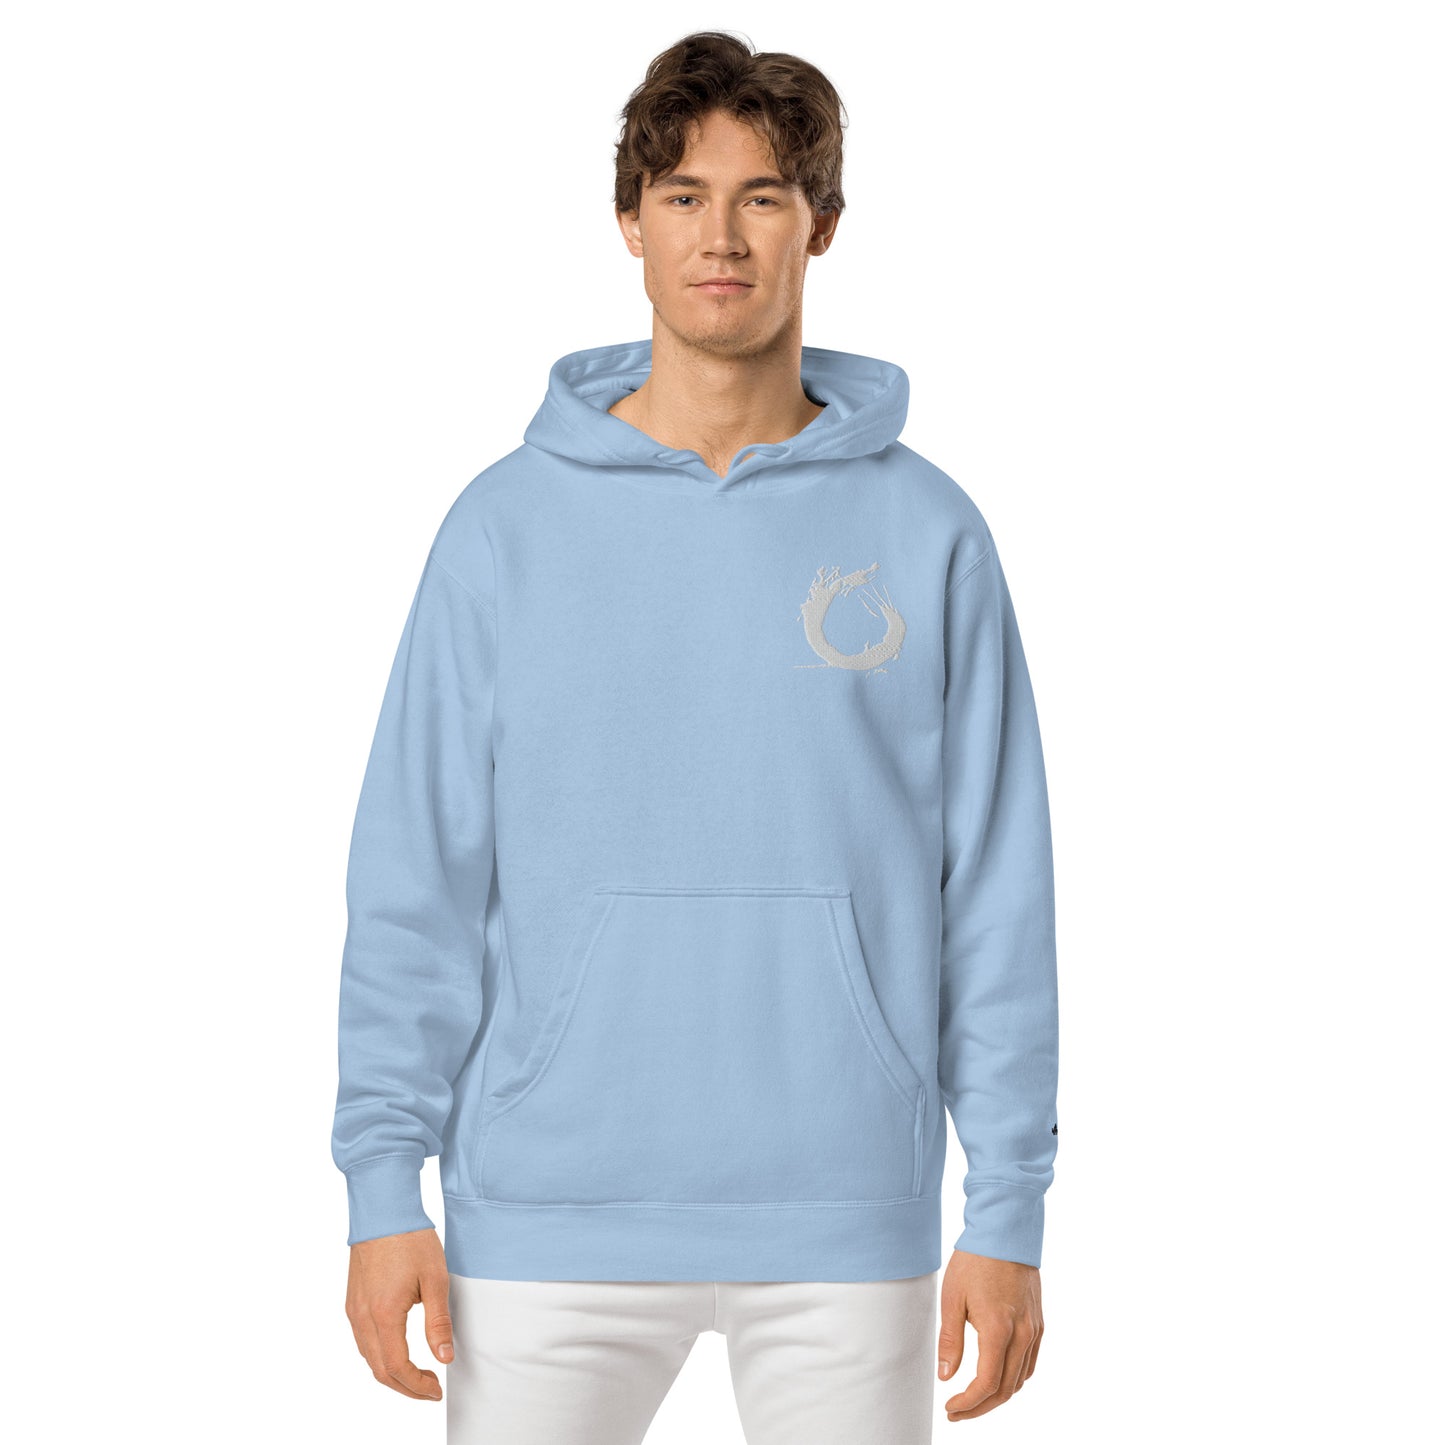 Unisex "Splash" pigment-dyed hoodie